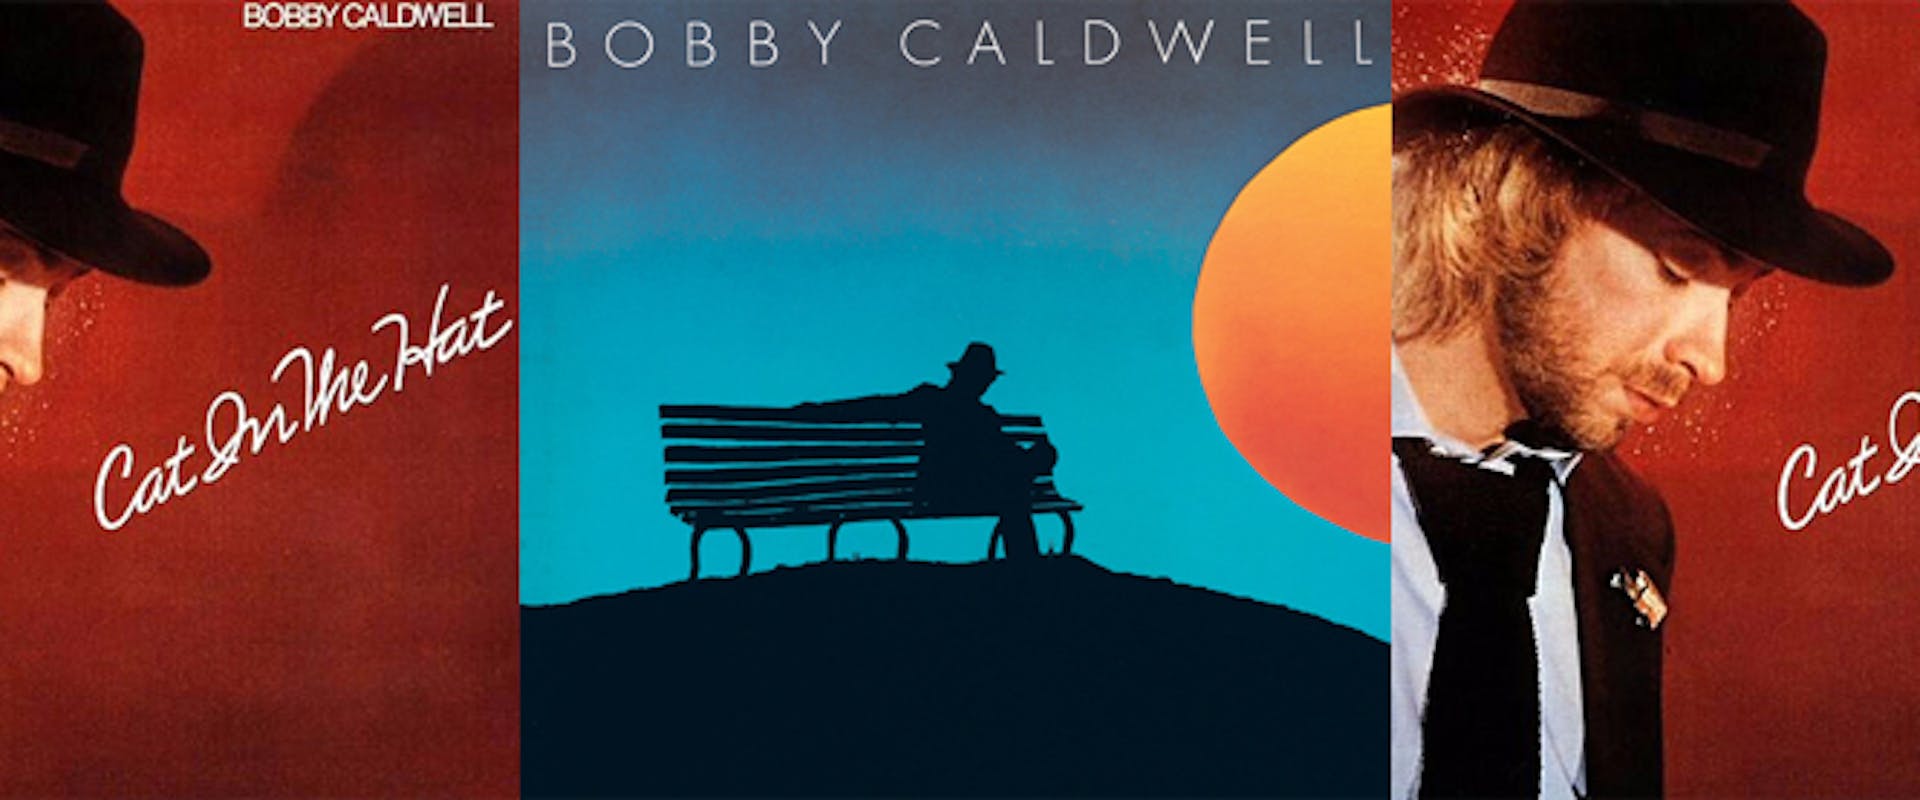 Sada Jeg klager Frank Worthley 5 Times Hip-Hop Sampled Legendary Musician Bobby Caldwell